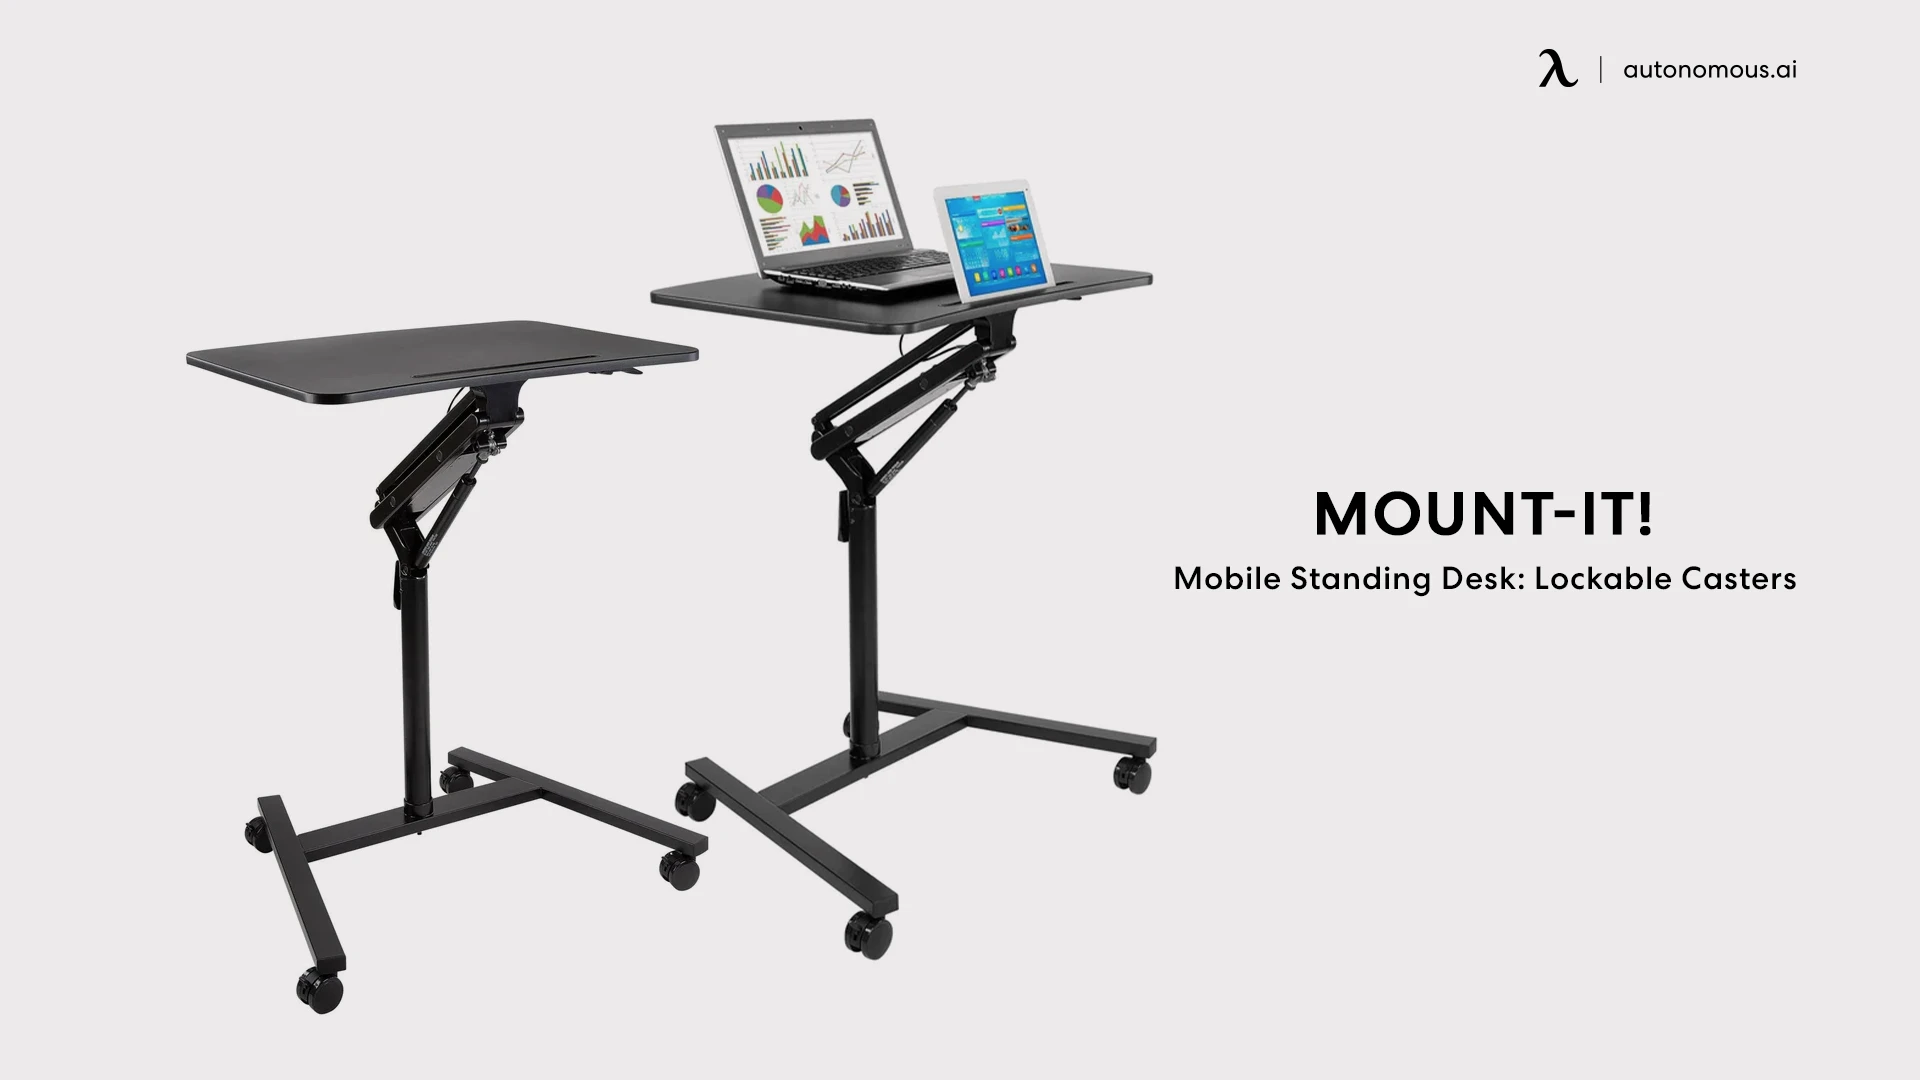 Mount-It! Mobile Standing Desk: Lockable Casters